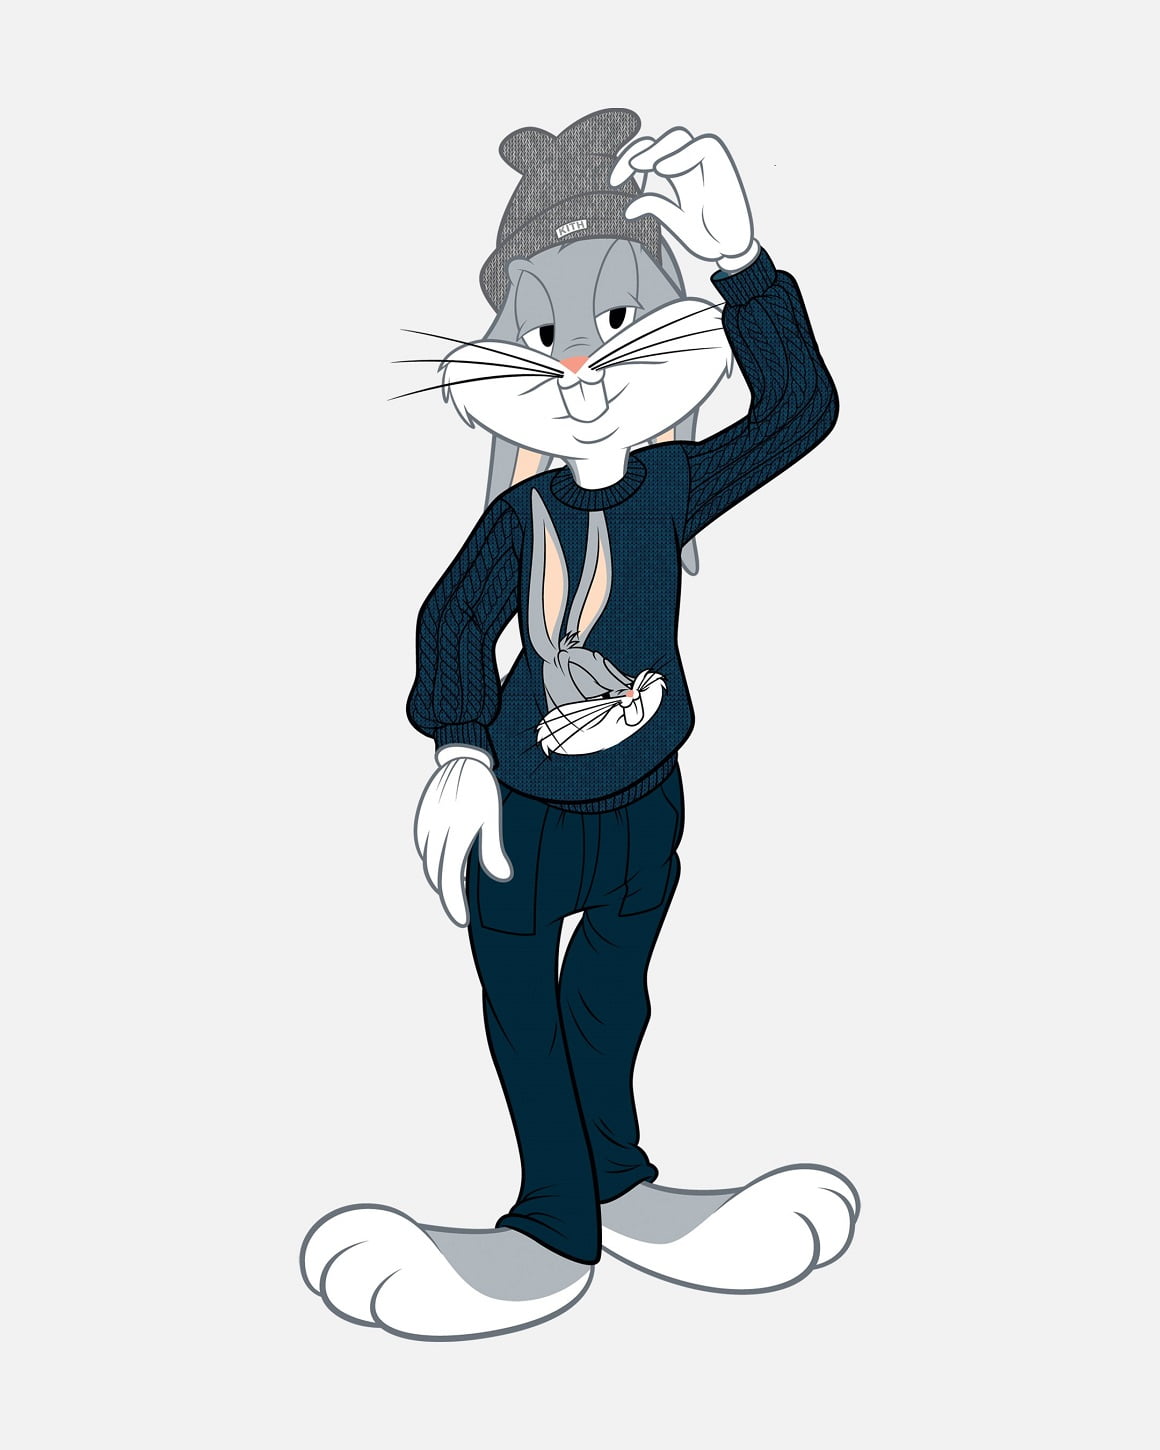 Bugs Bunny Stars in the Upcoming Kith x Looney Tunes Lookbook - KLEKT Blog